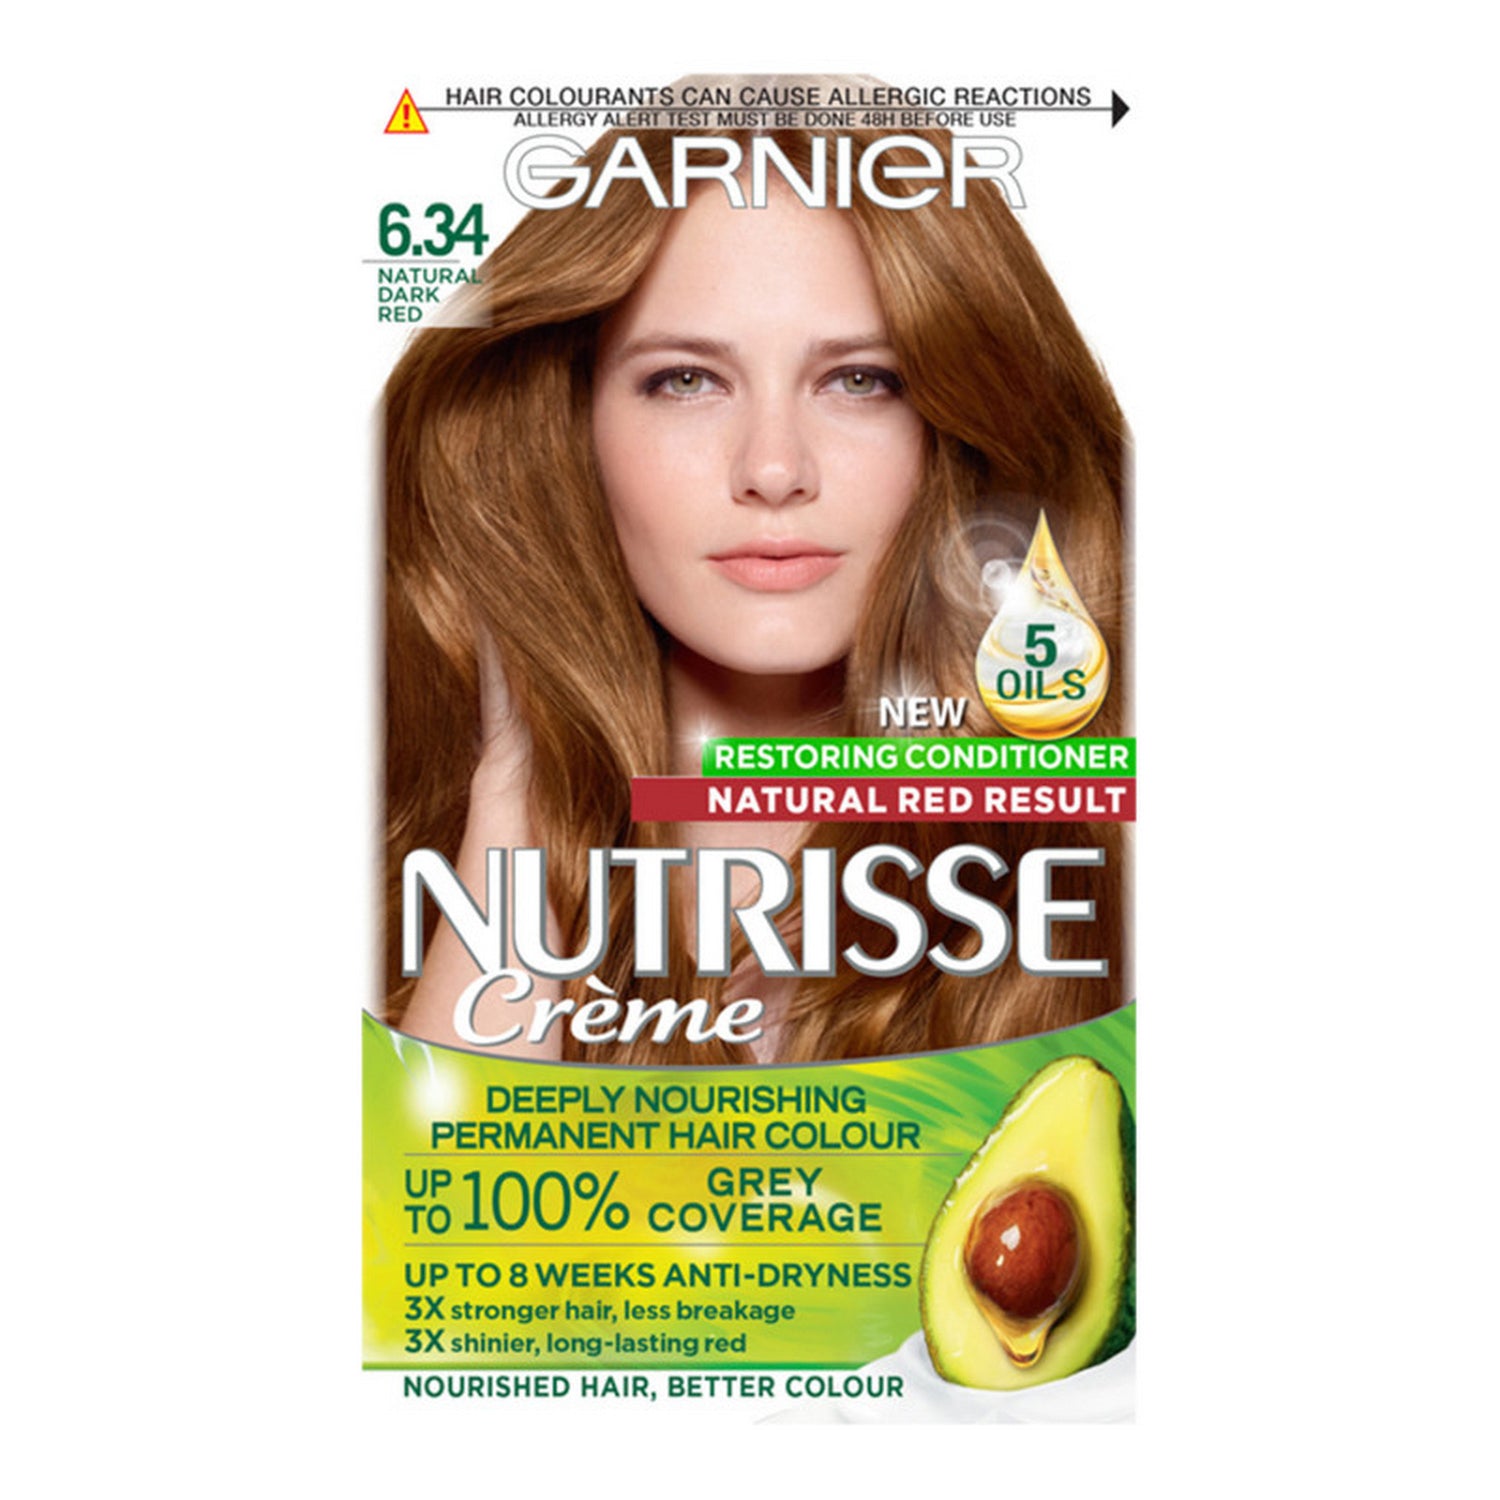 Garnier Nutrisse Ultra Crème Permanent Hair Dye Natural Dark Red